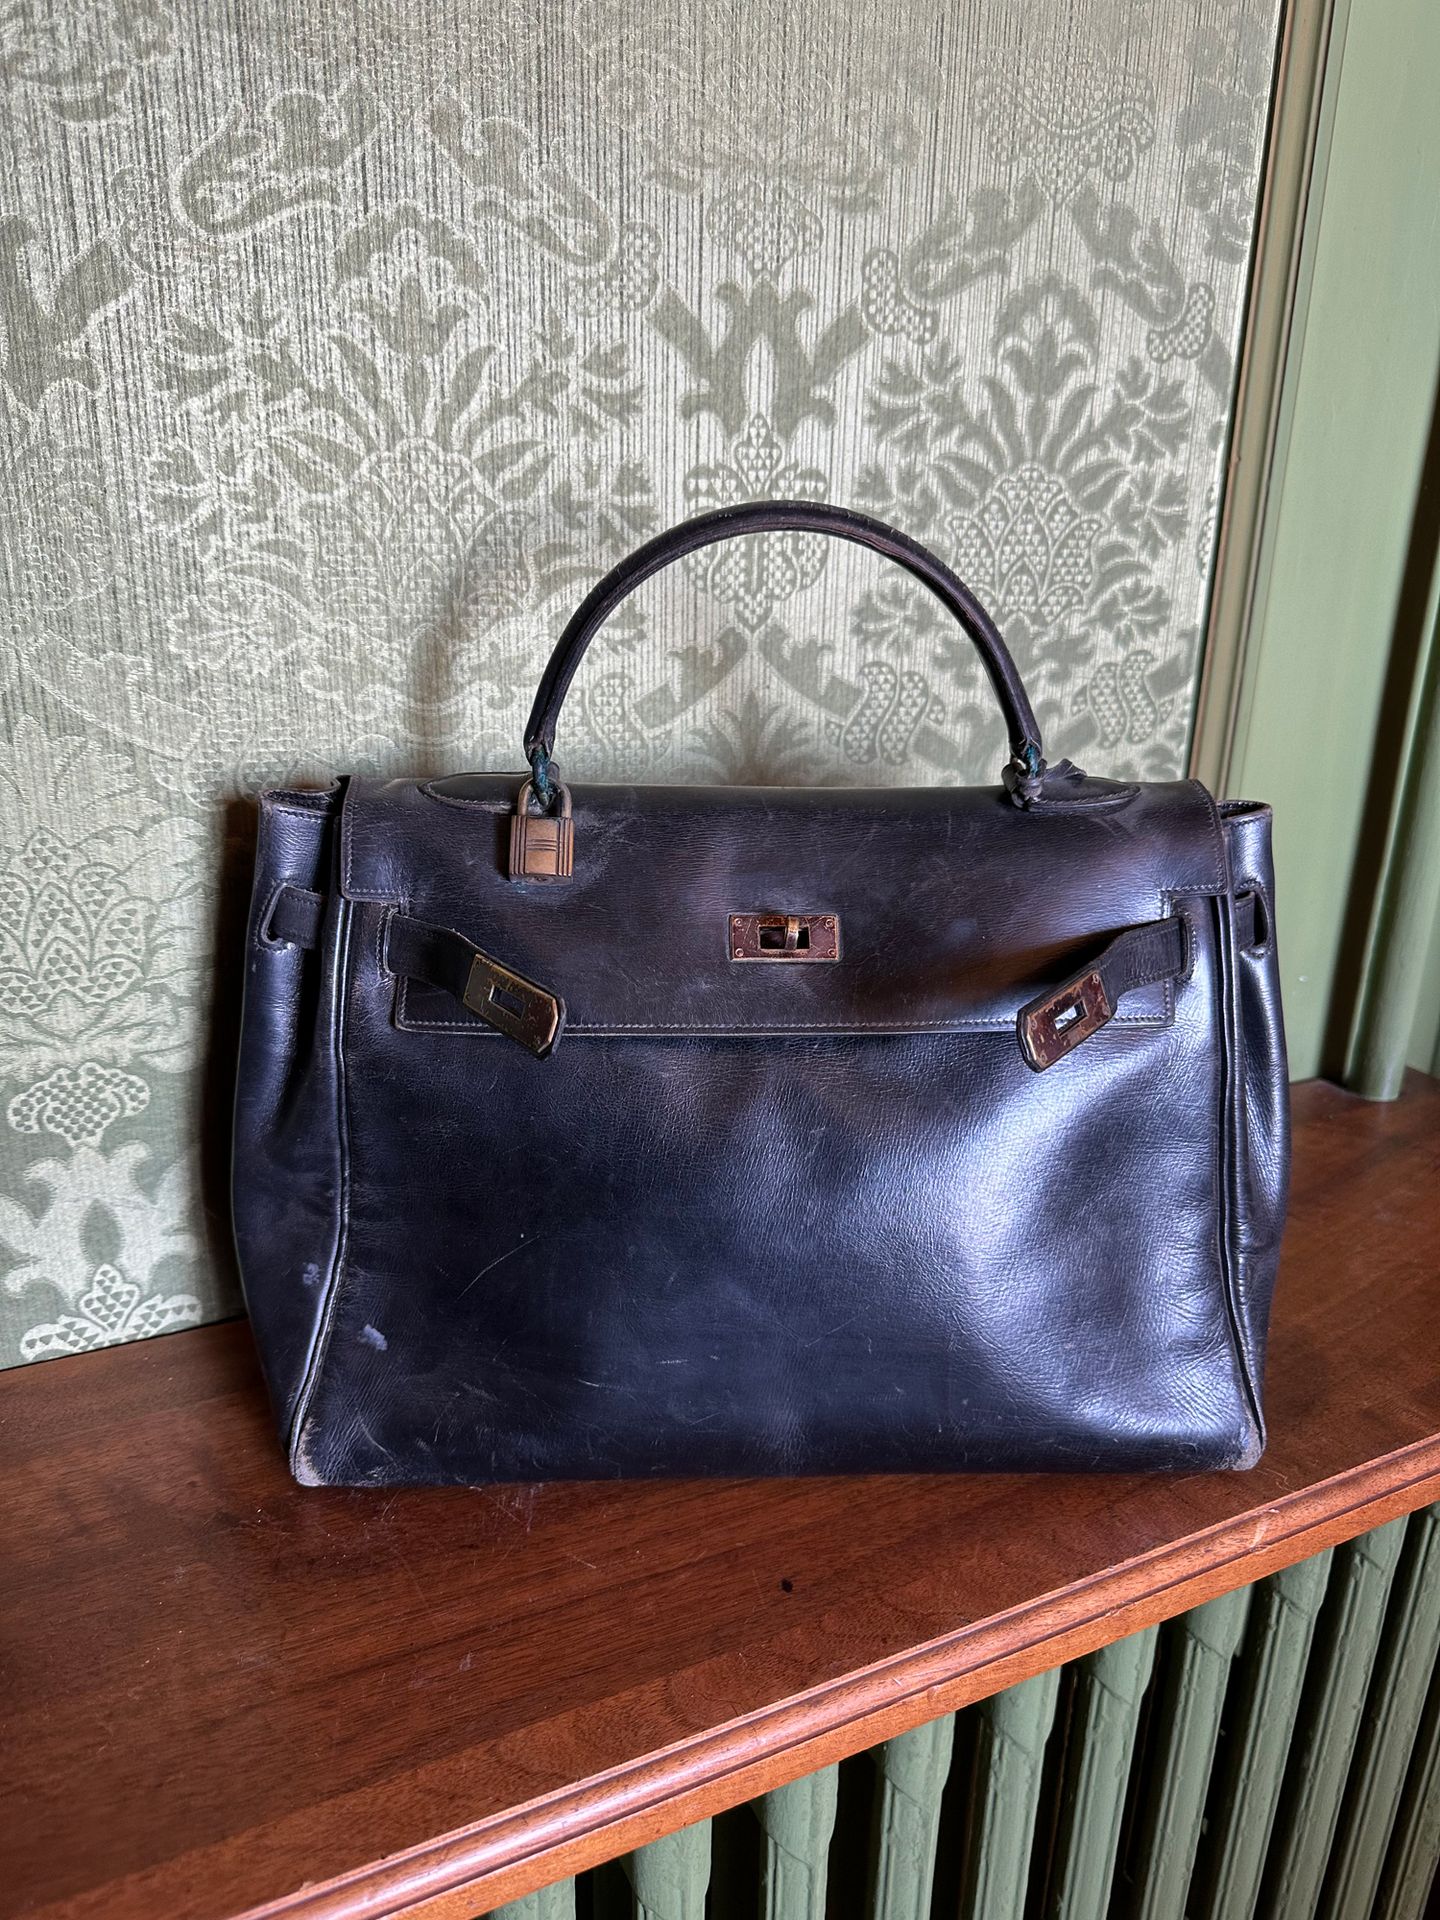 Hermès Paris Kelly bag
Black leather box (Worn)